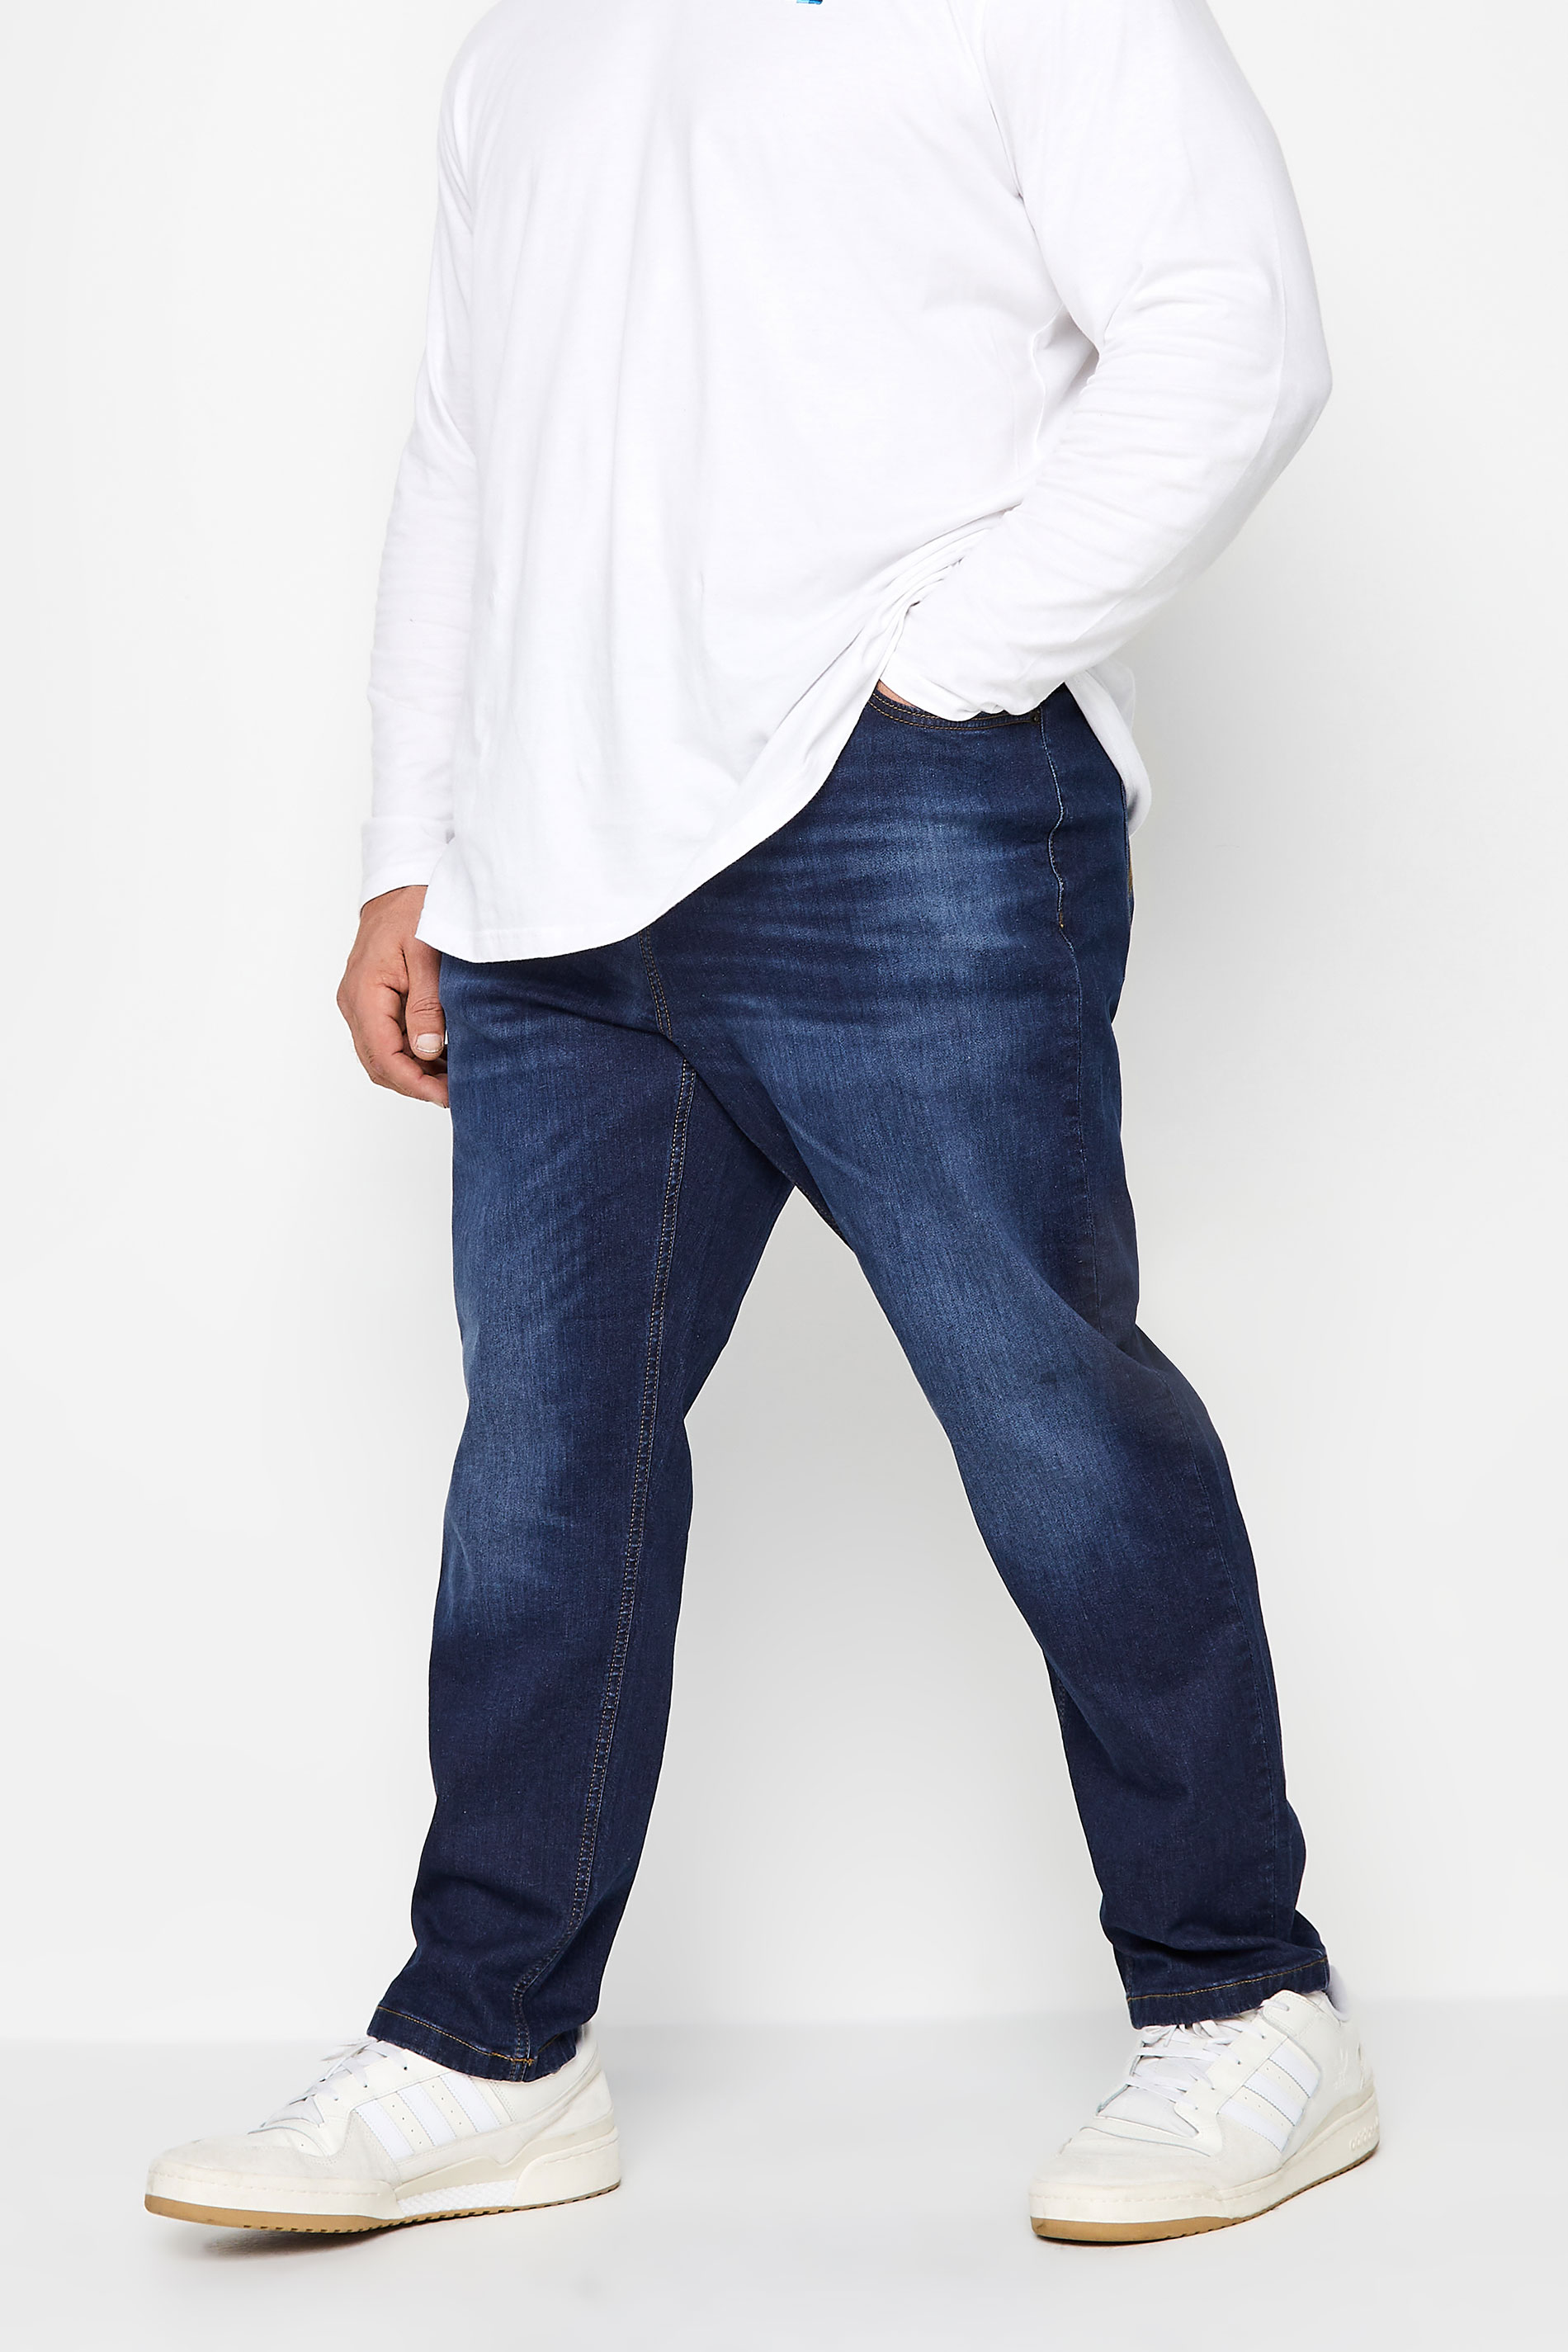 BadRhino Big & Tall Dark Wash Denim Jeans | BadRhino 1